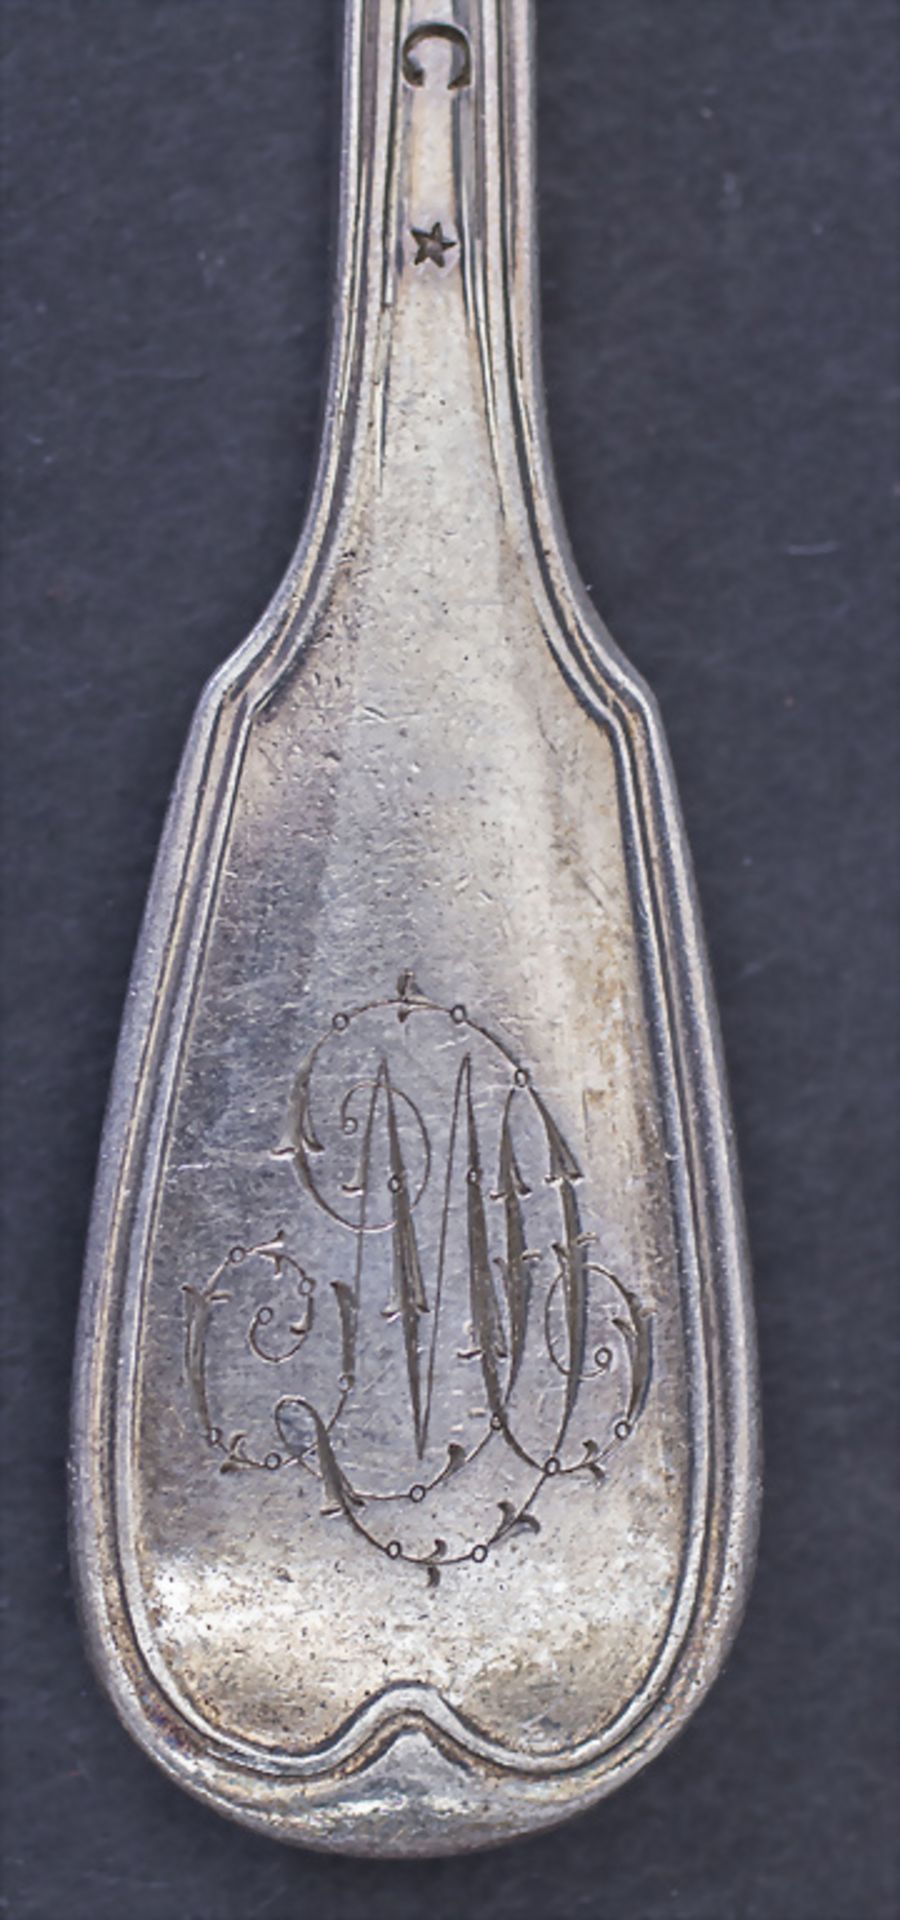 12-tlg. Silberbesteck / A 12-piece set of silver cutlery, J.L. Tardiou, Paris, nach 1819 - Image 6 of 6